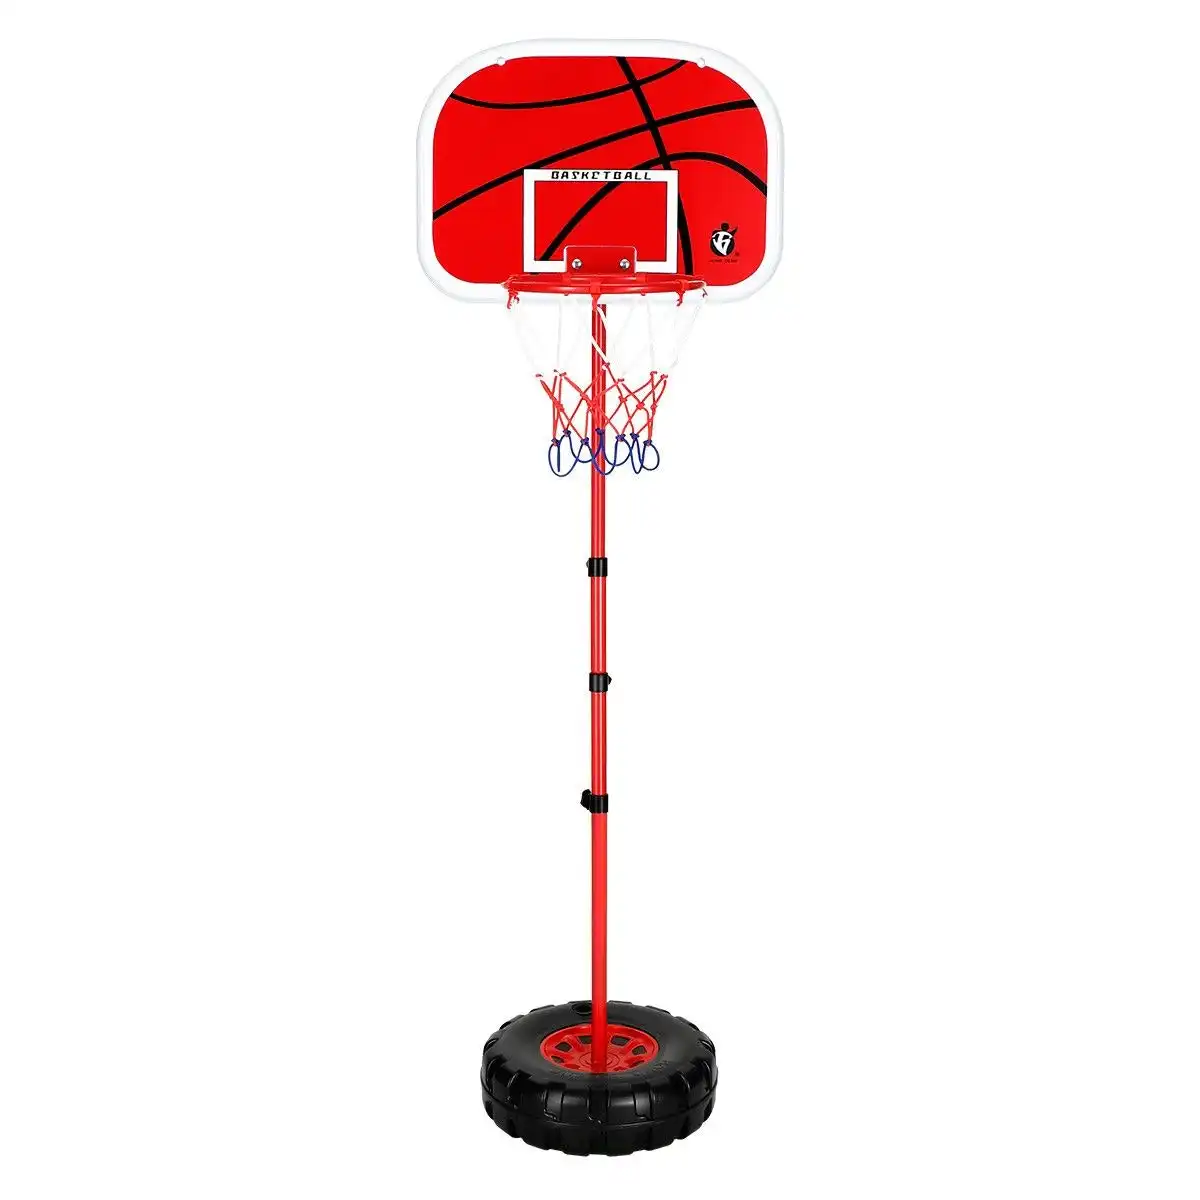 Ausway 2m Basketball Hoop for Toddler Kids Children Portable Adjustable Indoor Training Set